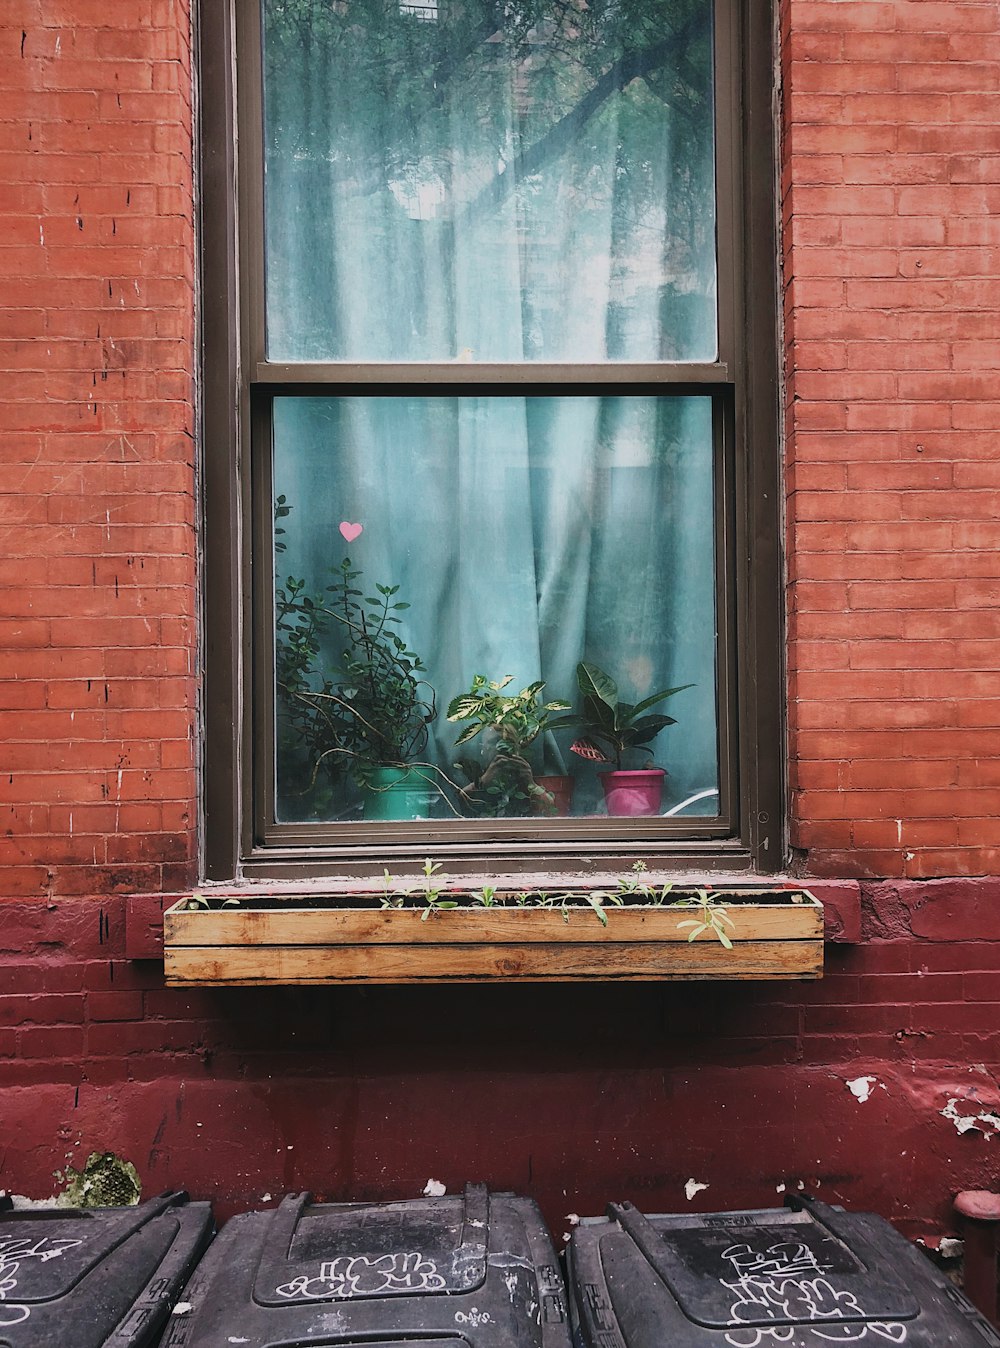 plants on window